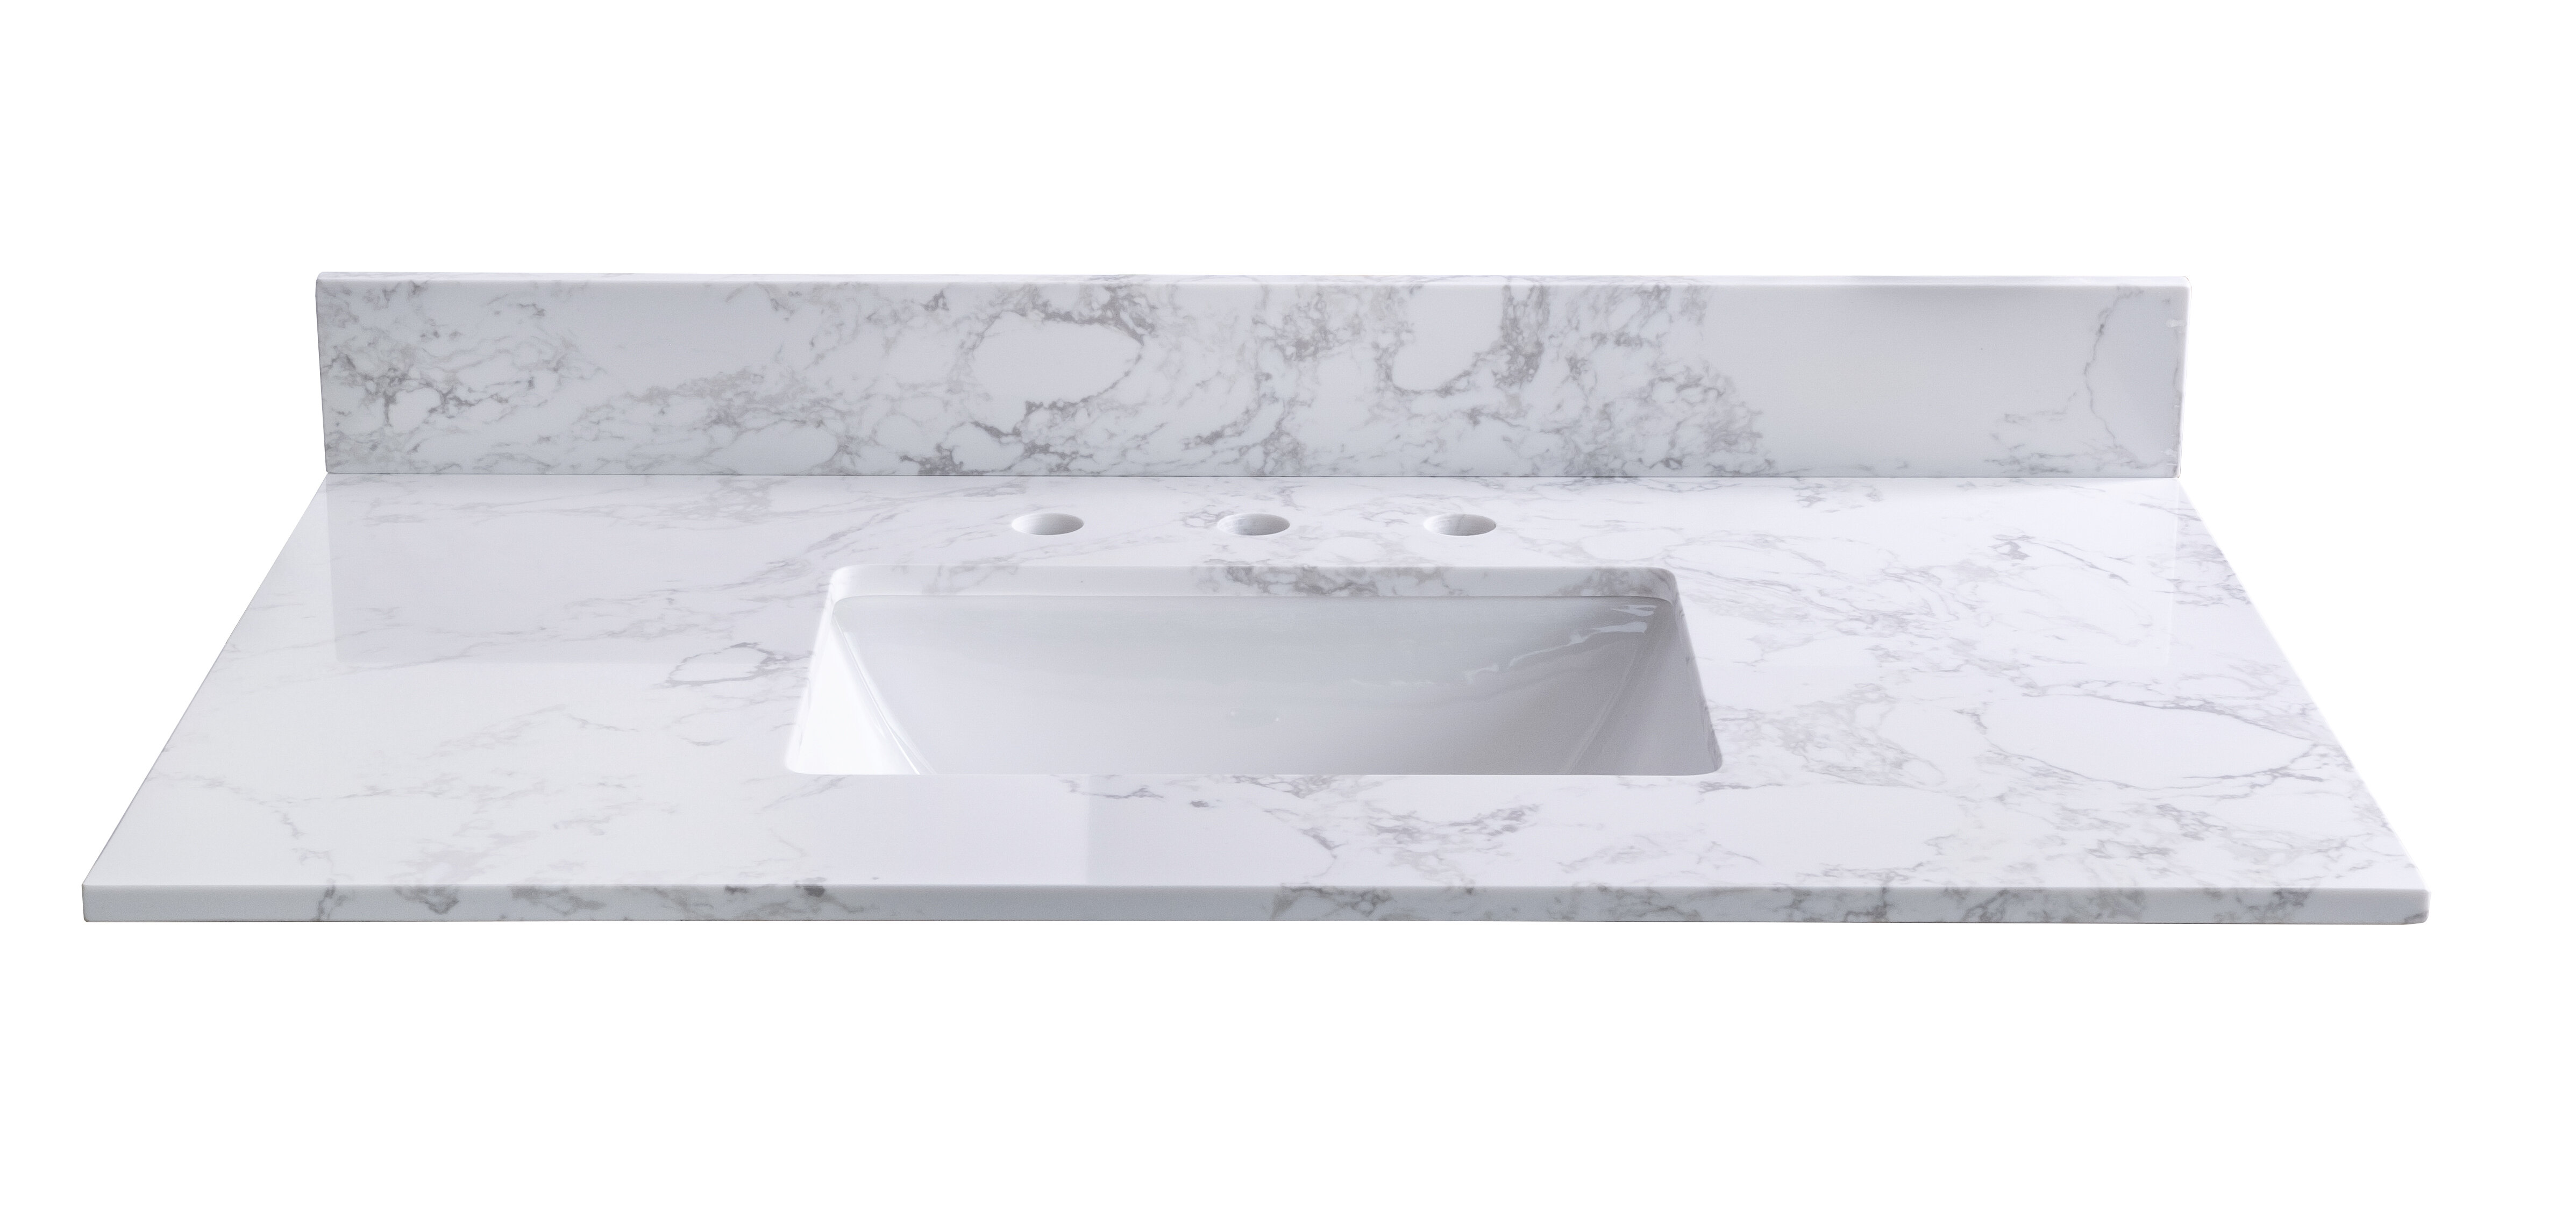 Wetiny 37 Single Bathroom Vanity Top In Carrara White With Sink